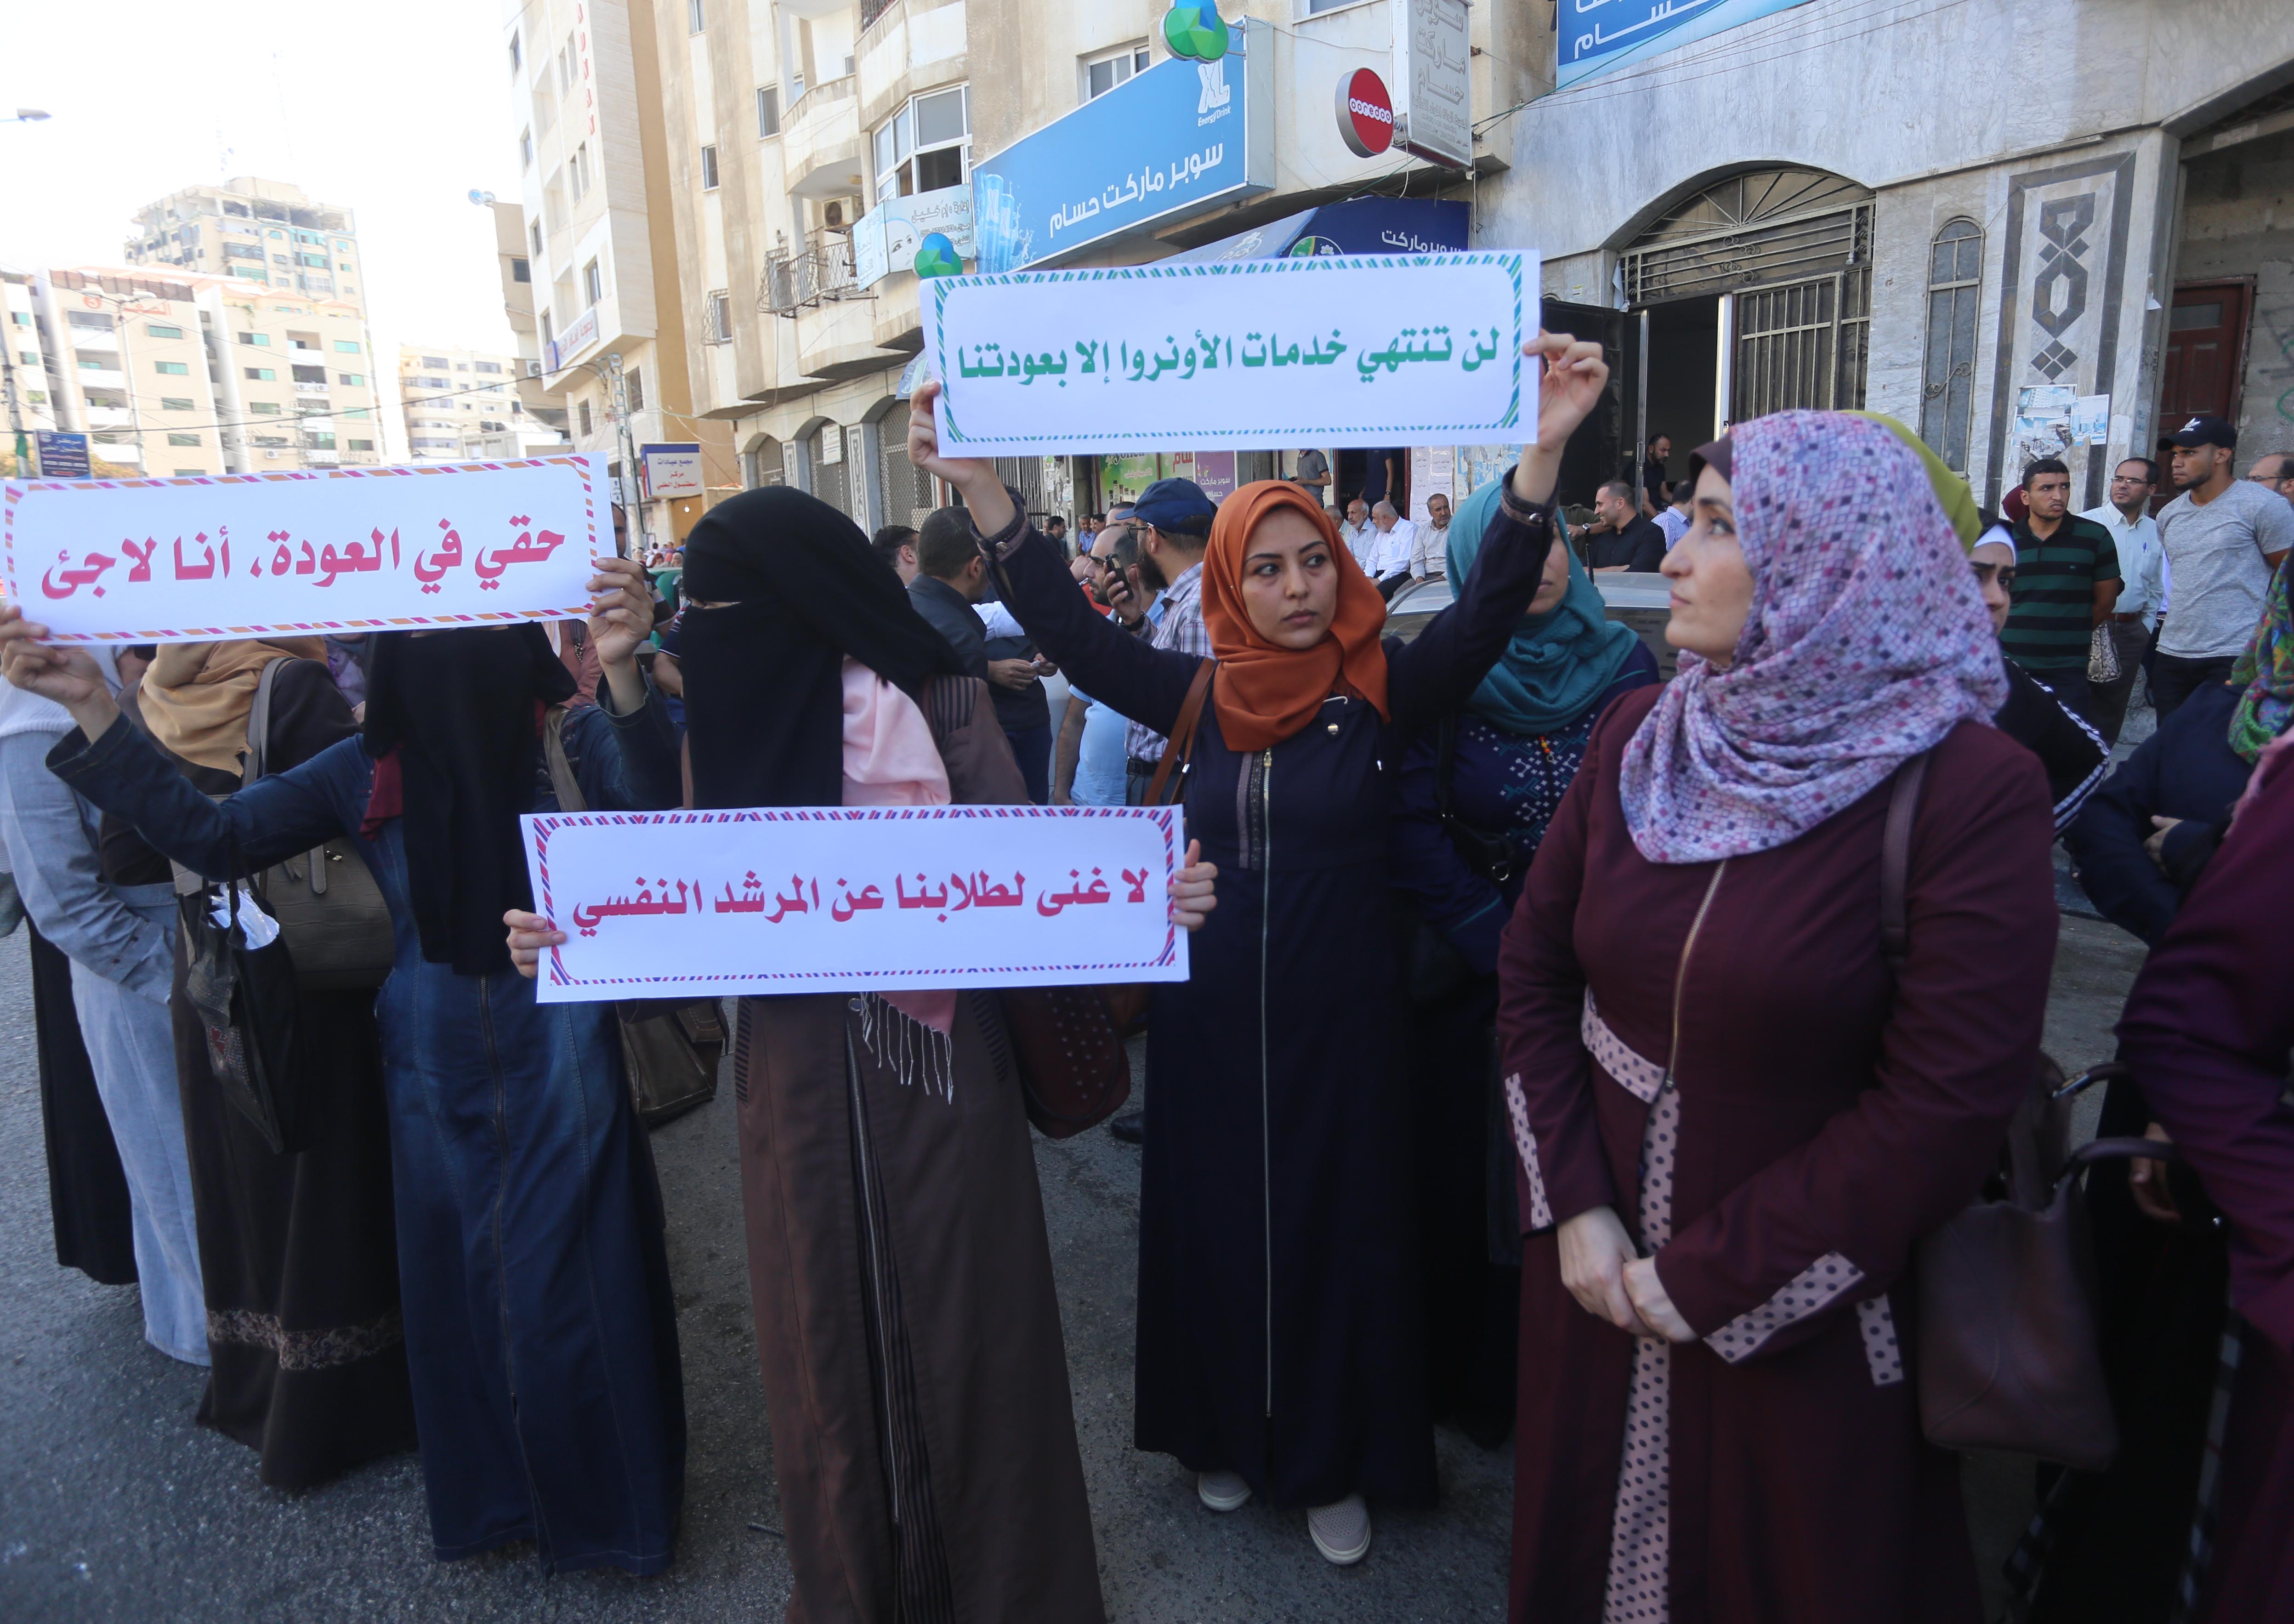 UNRWA staff in Gaza to strike – Middle East Monitor